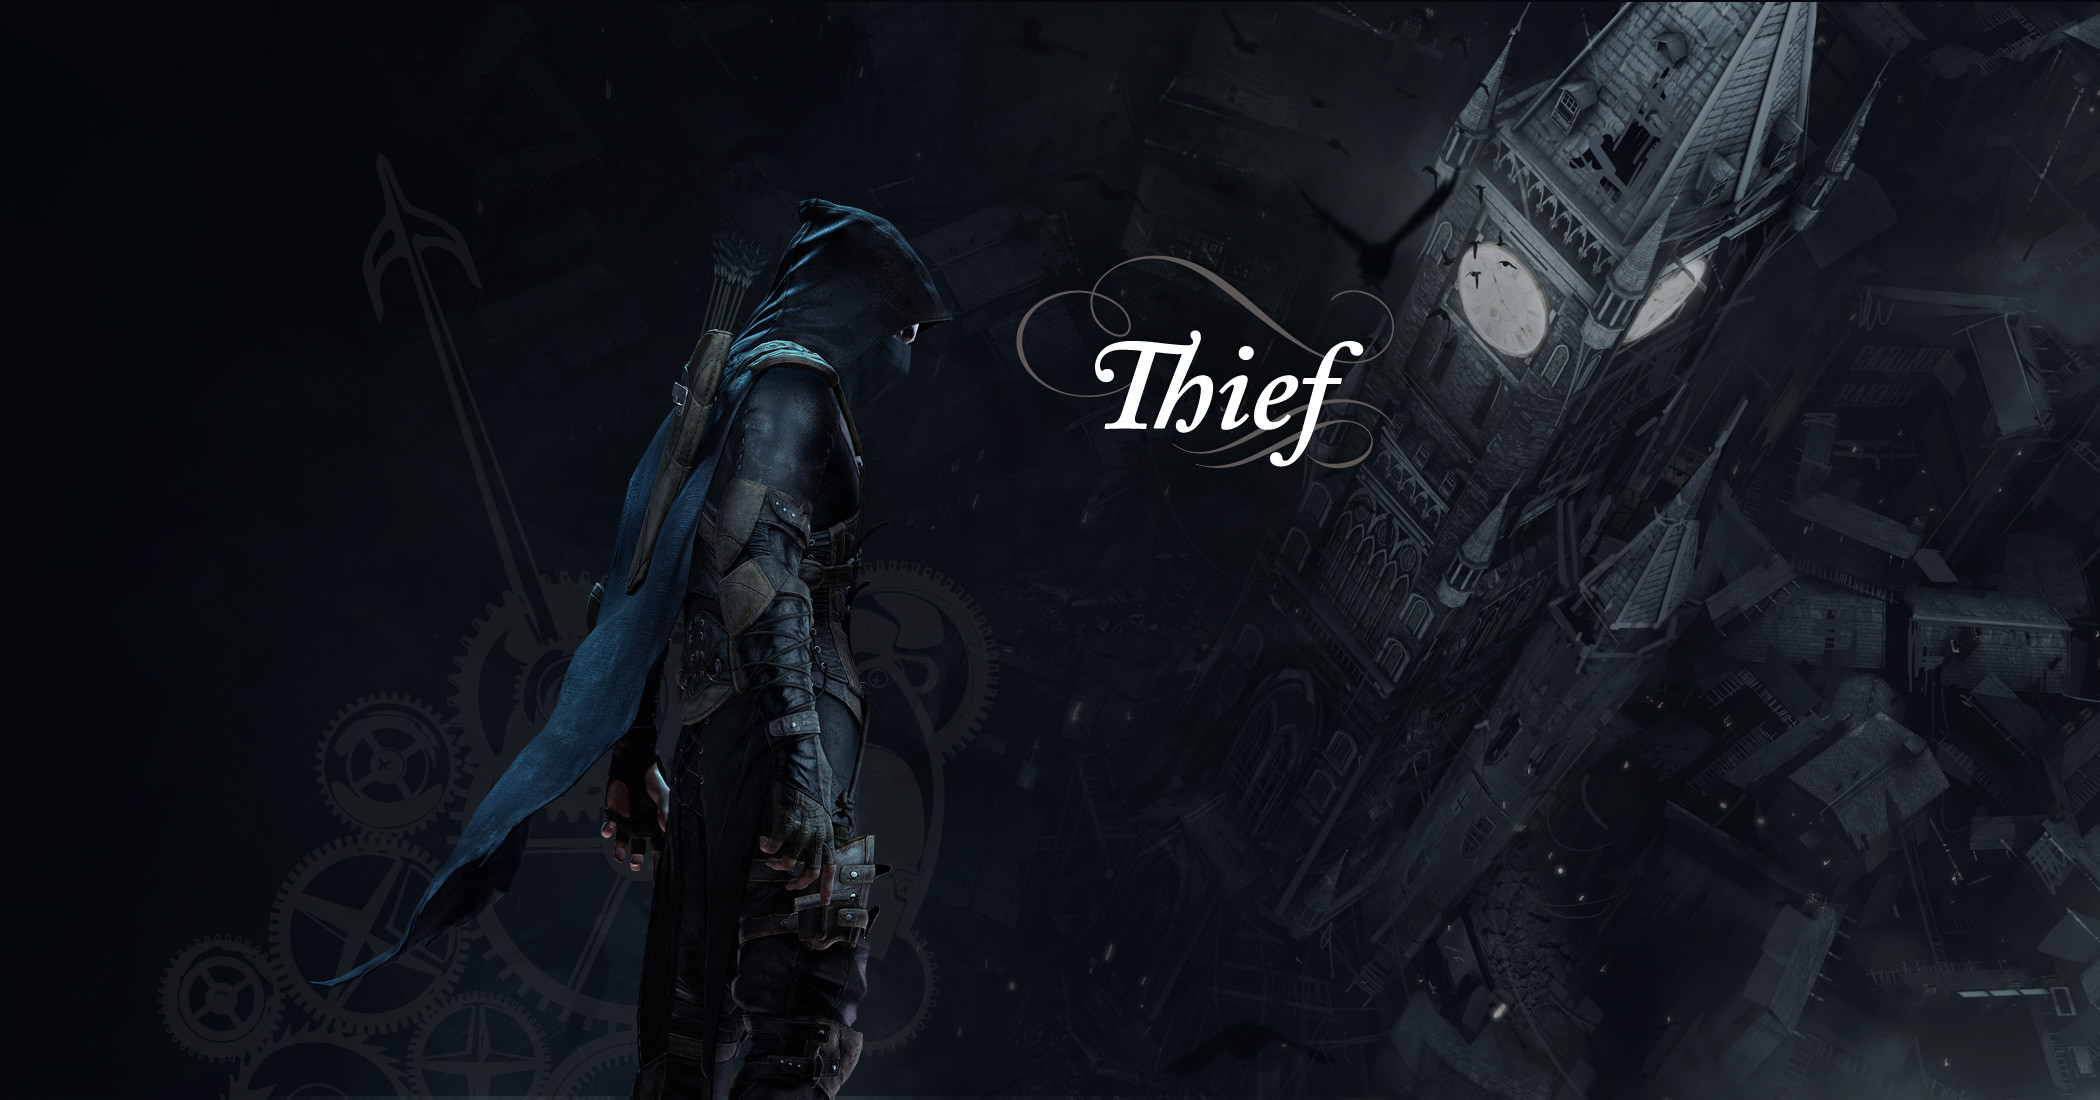 thief-header05032013